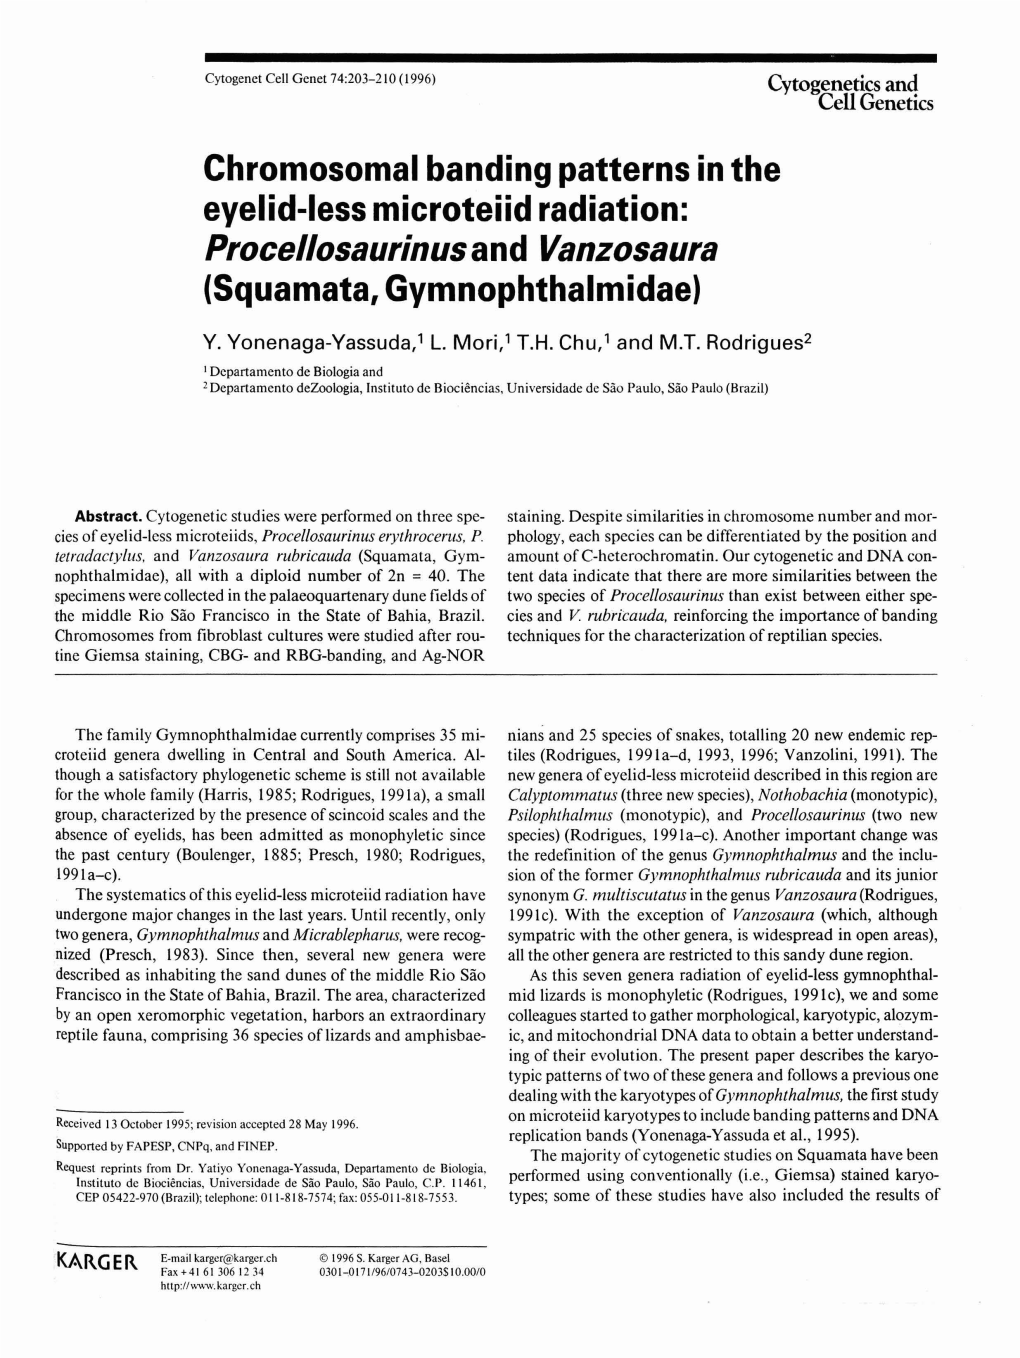 Chromosomal Banding Patterns in the Eyelid-Less Microteiid Radiation: Procellosaurinus and Vanzosaura (Squamata, Gymnophthalmidae)